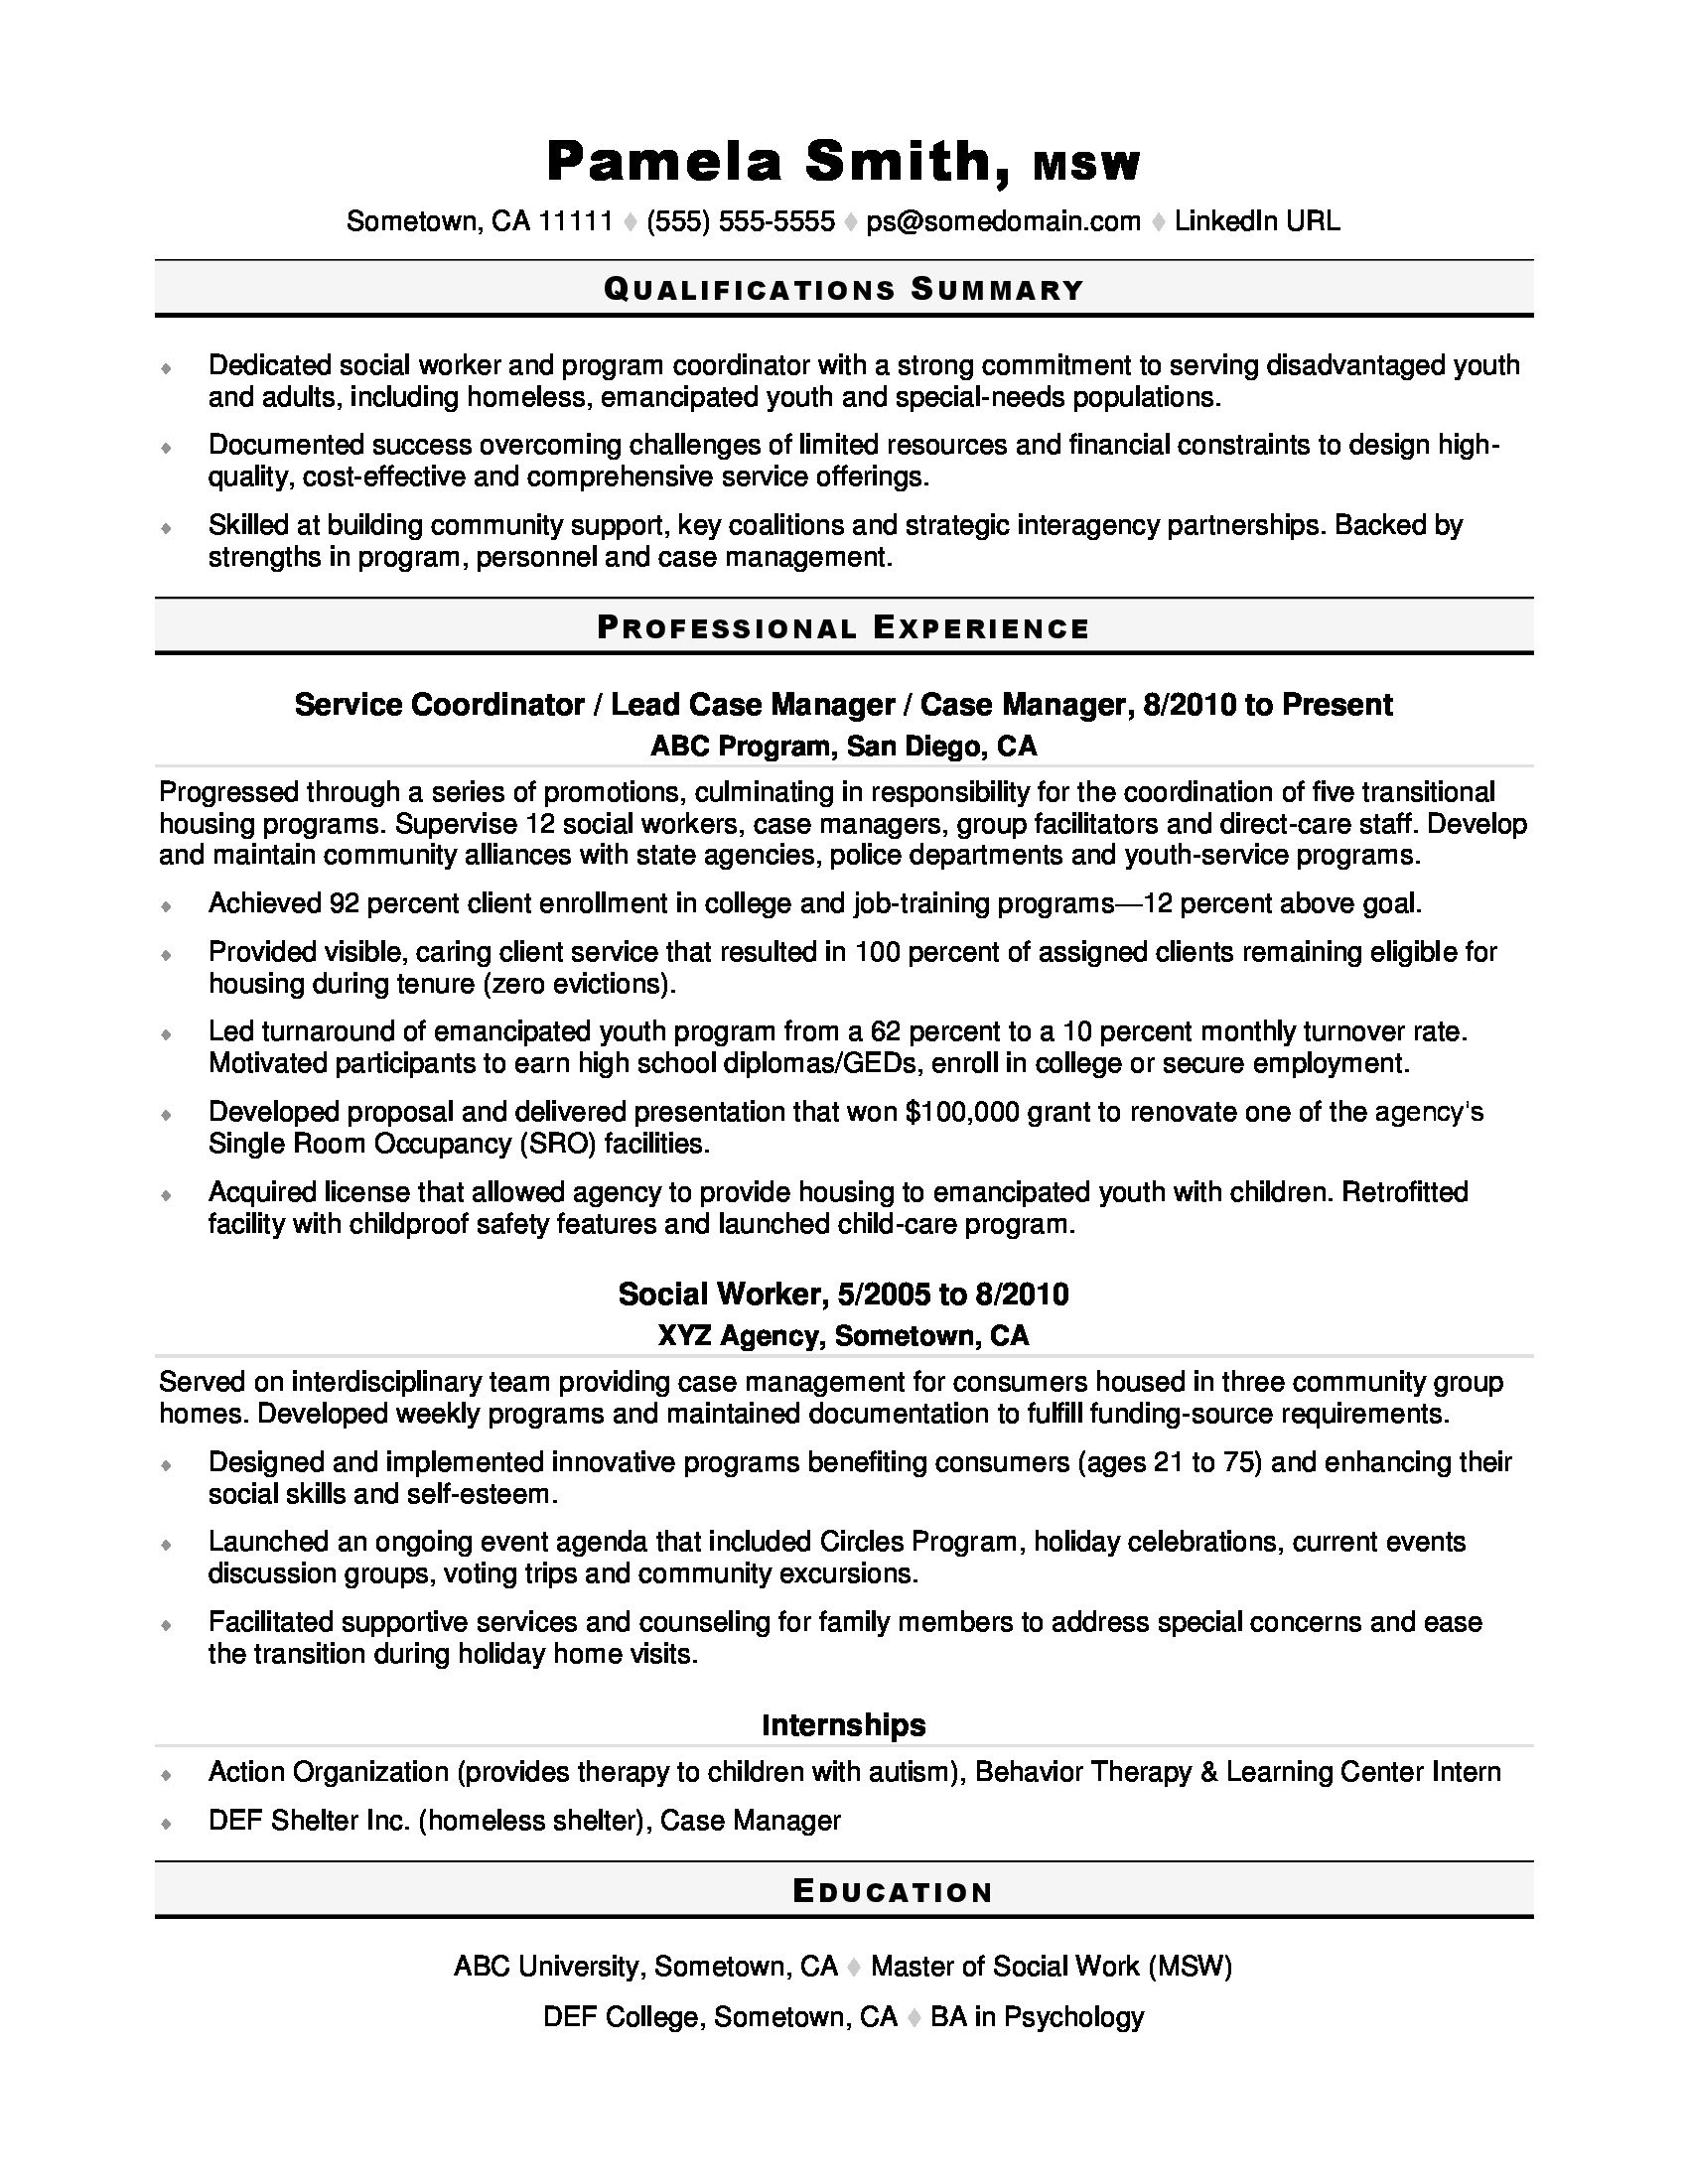 Sample Resume In Applying A Job In California social Work Resume Monster.com